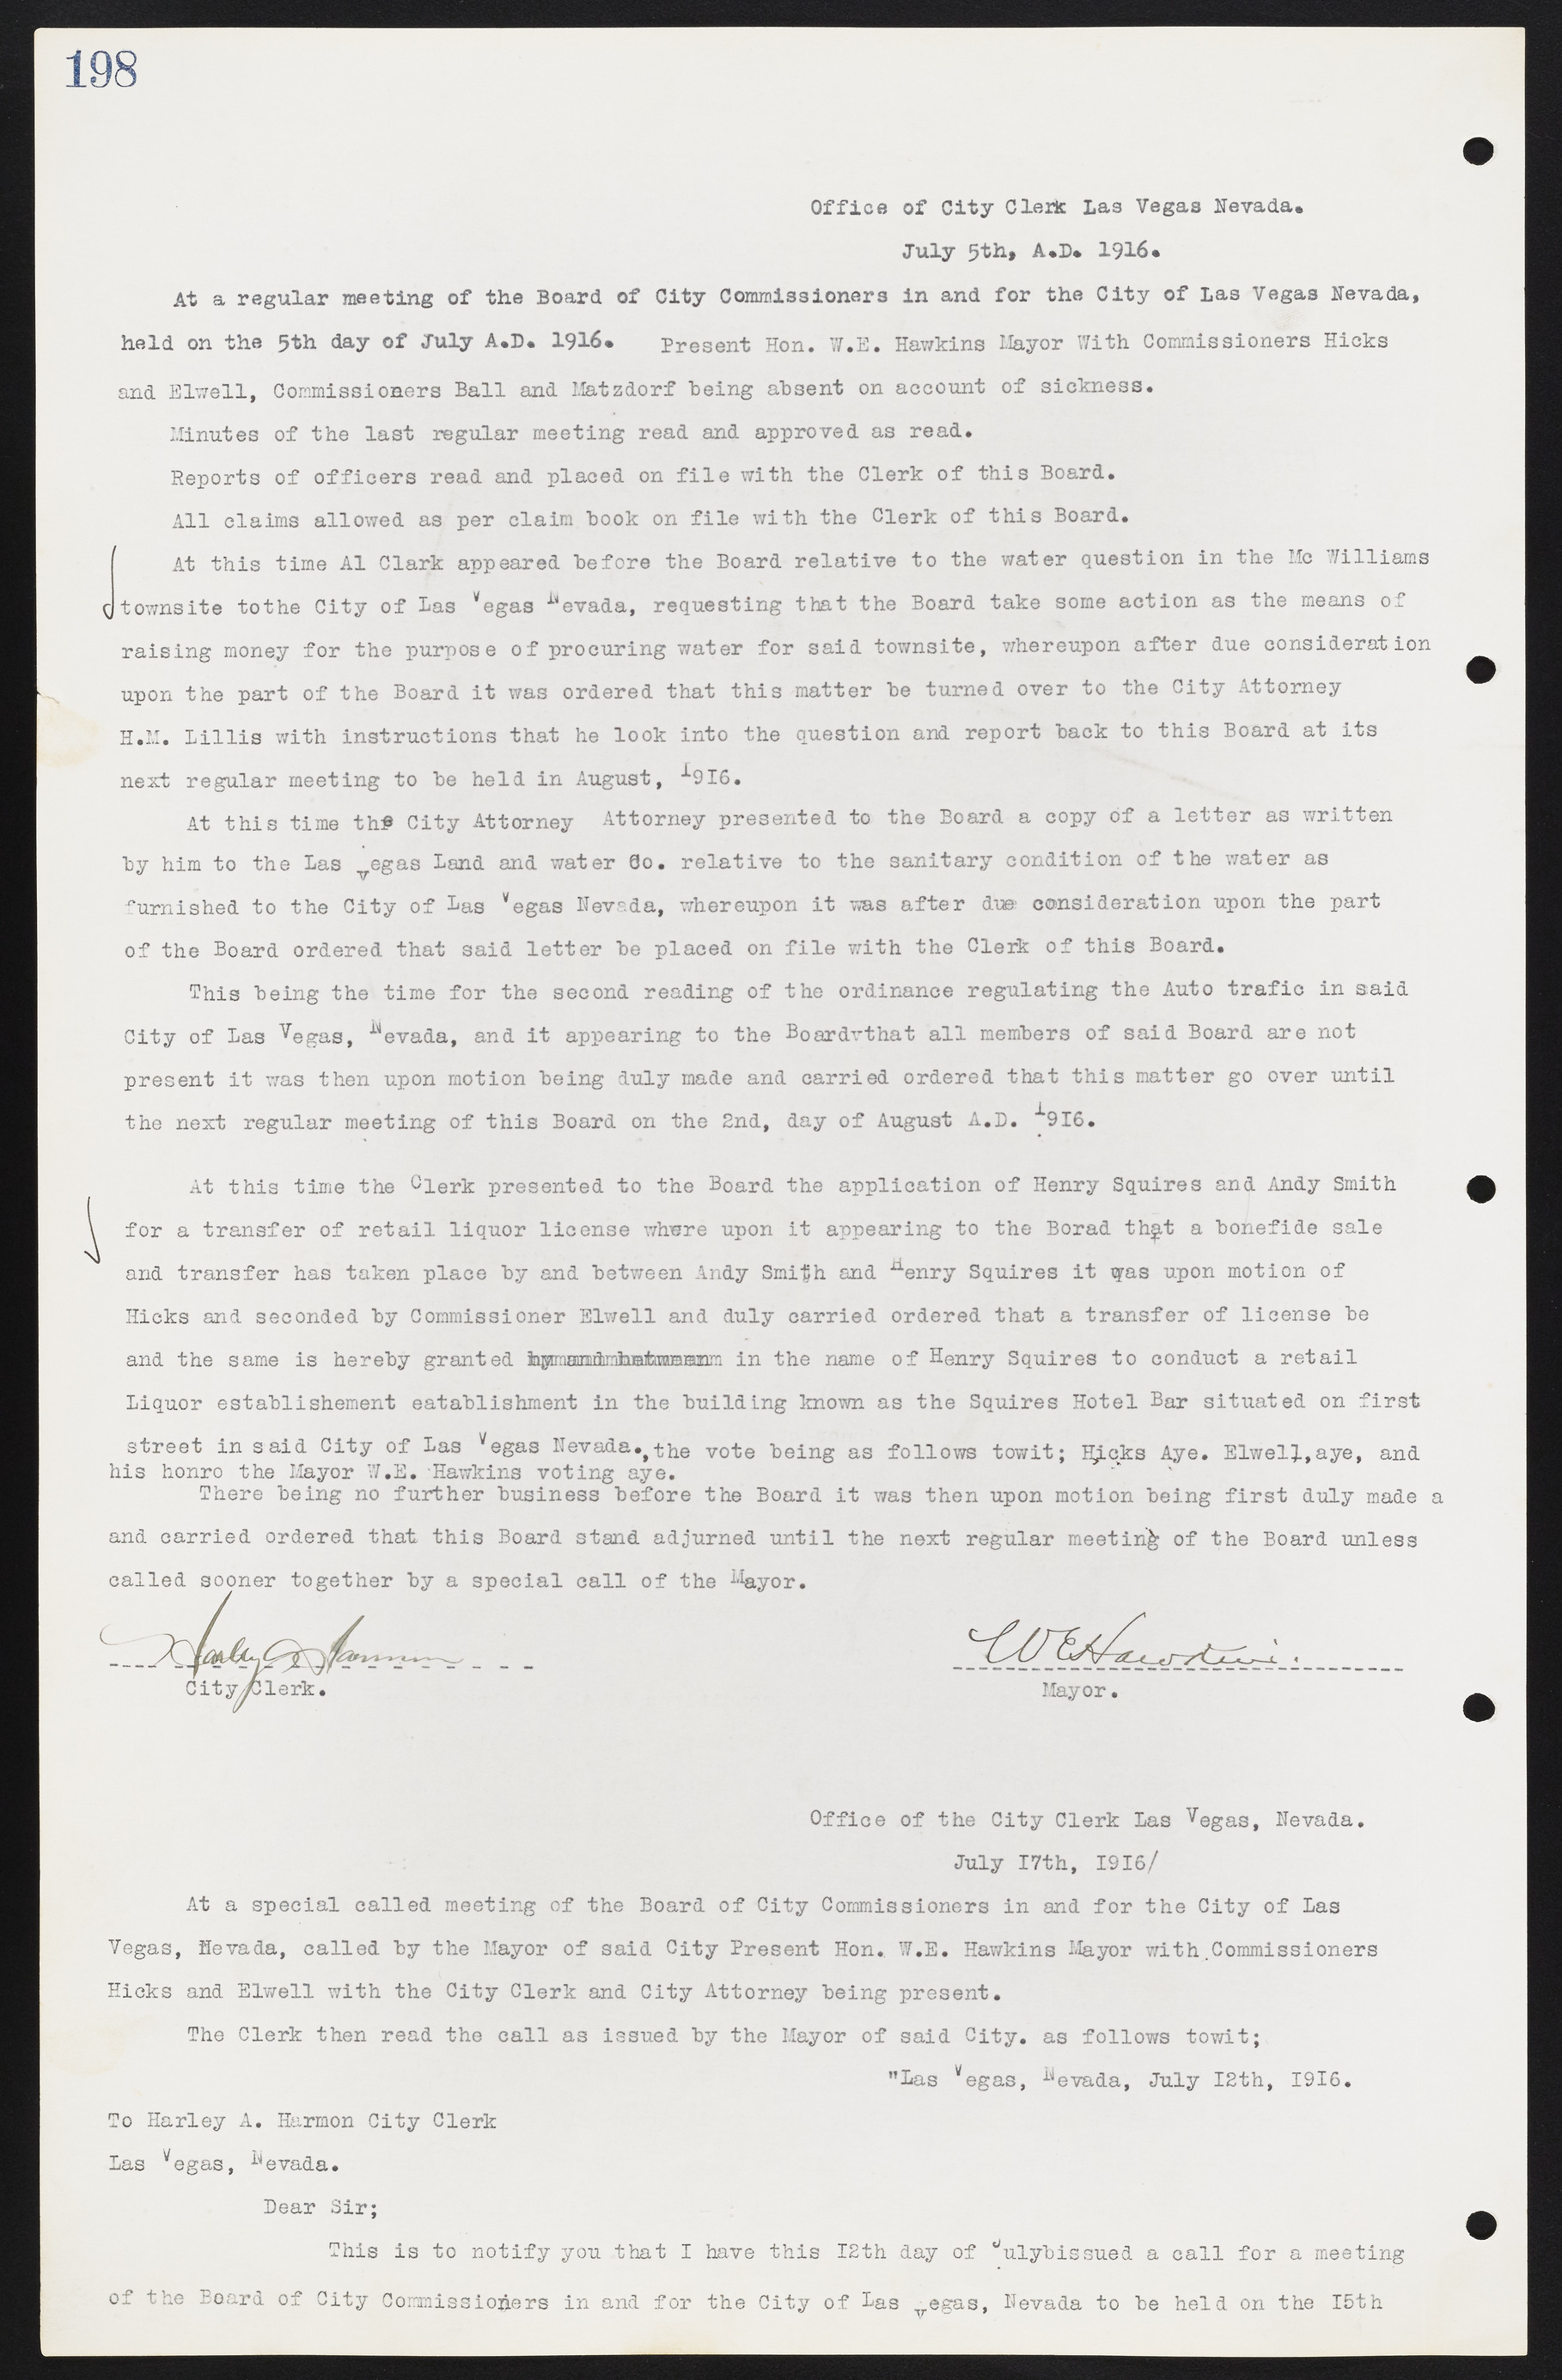 Las Vegas City Commission Minutes, June 22, 1911 to February 7, 1922, lvc000001-214